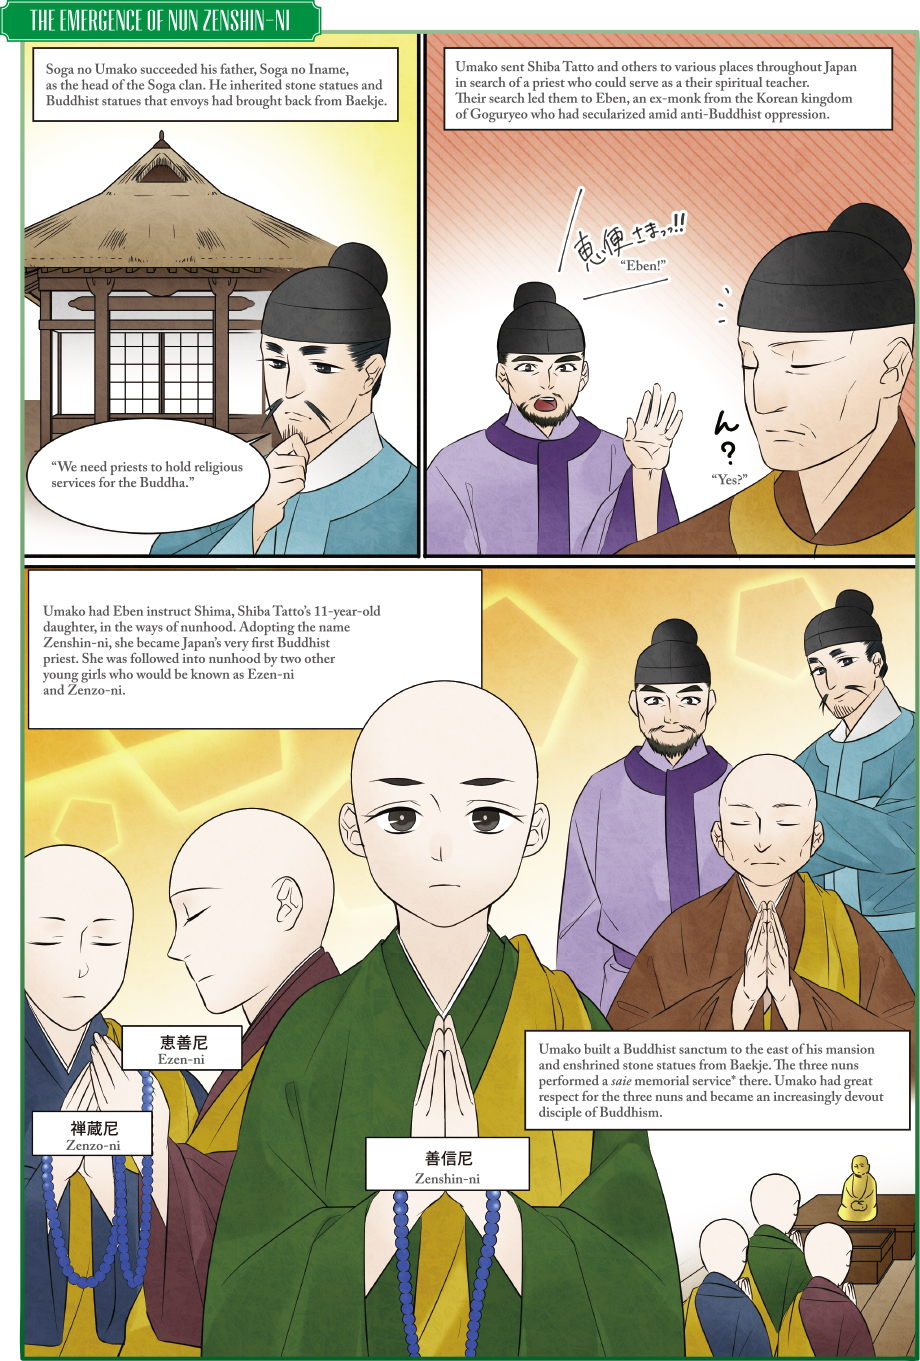 The emergence of Nun Zenshin-ni